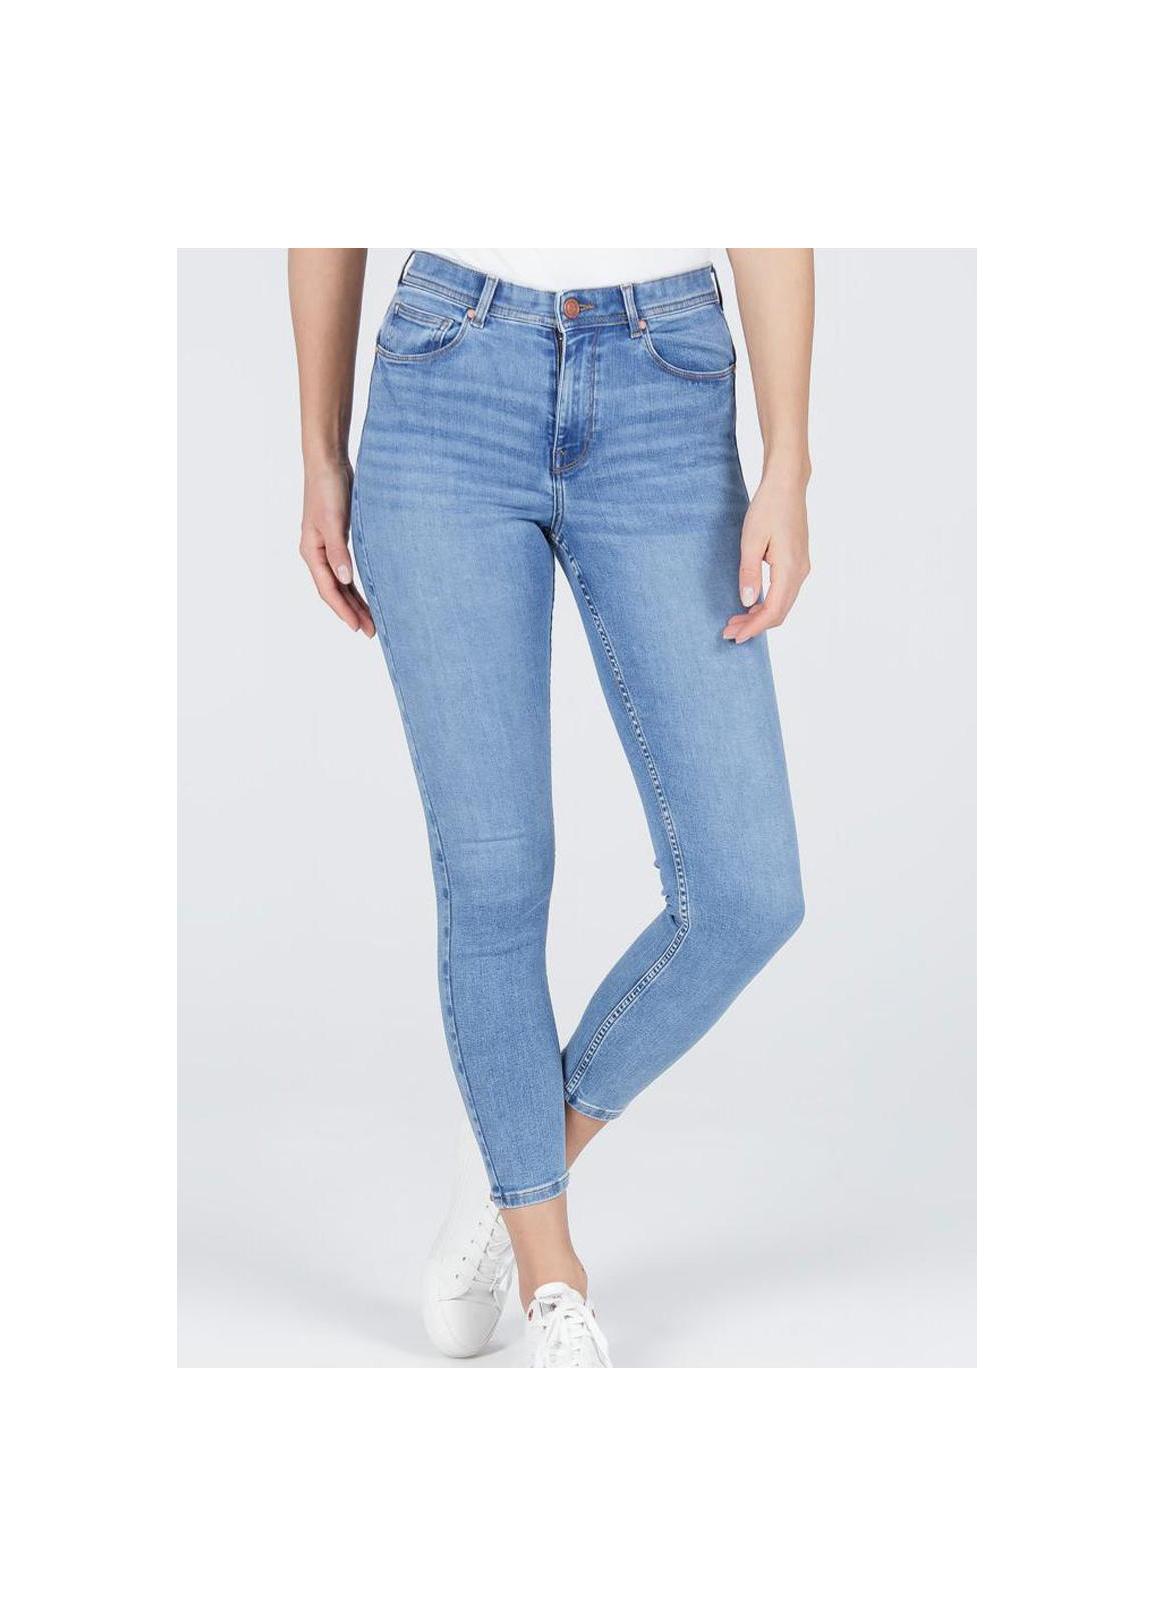 Cross Jeans® Super Skinny Fit - Light Mid Blue